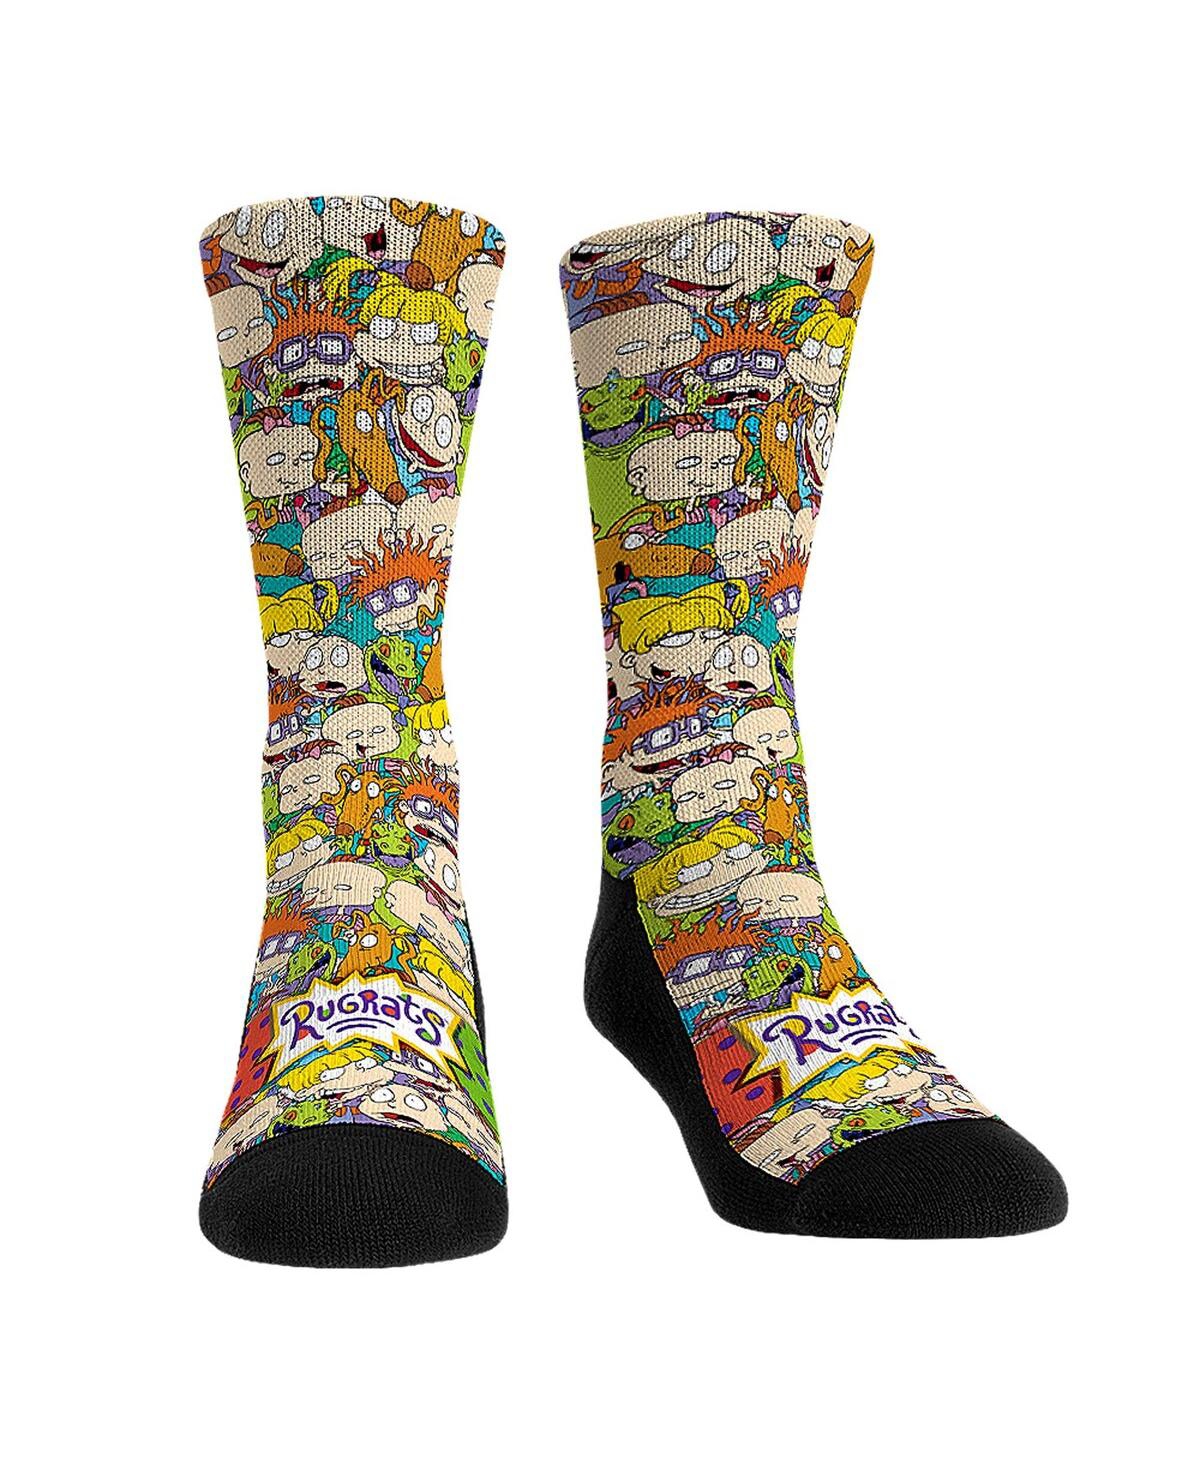 Men's and Women's Rock 'Em Socks Rugrats Stacked Characters Crew Socks - Multi